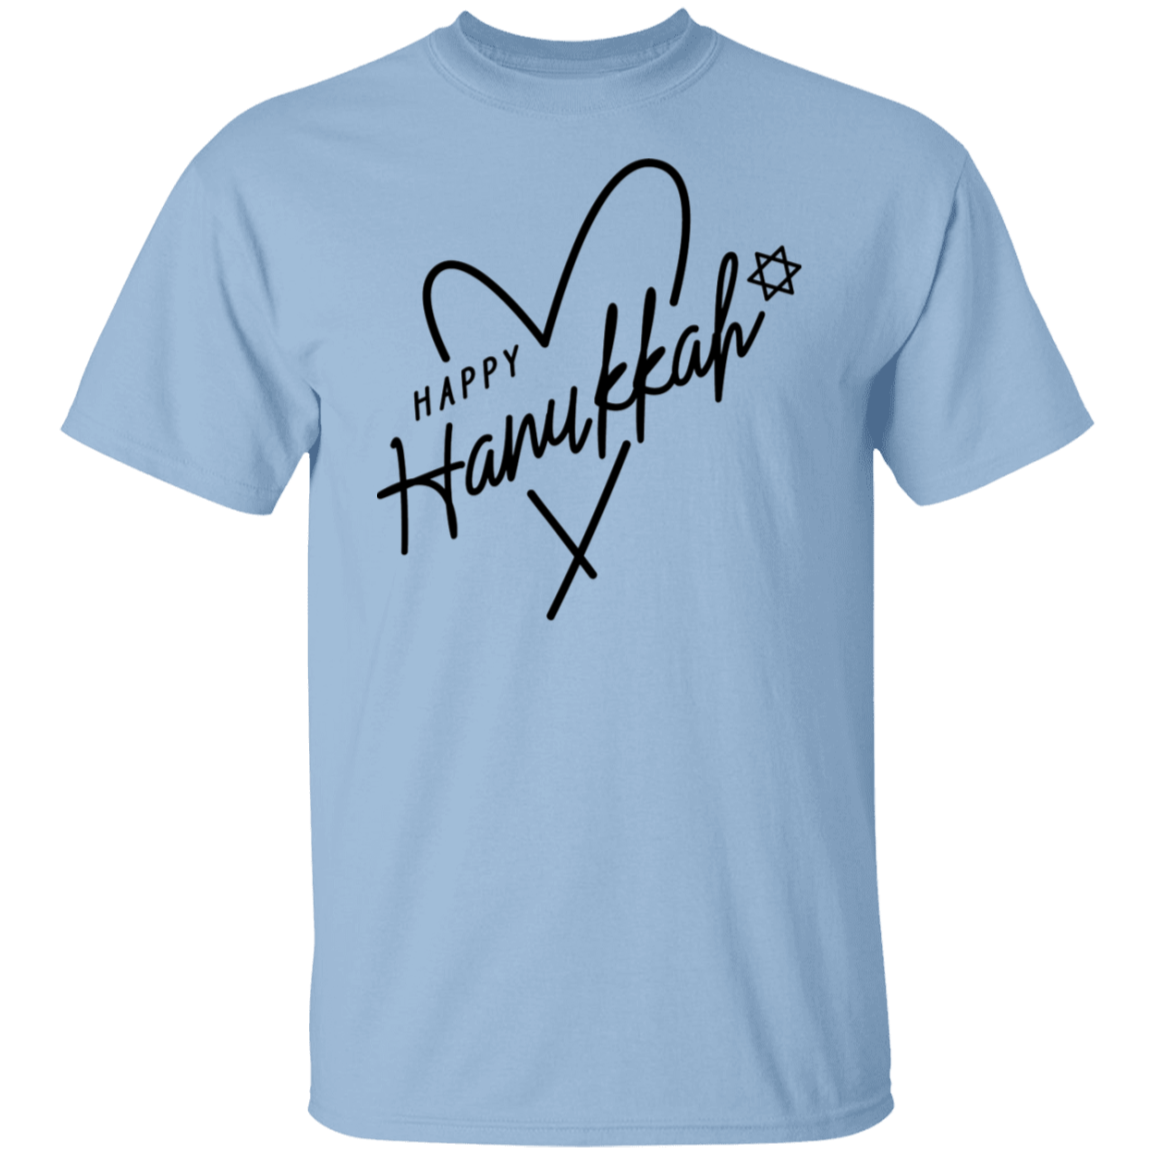 Hannukah Heart T-Shirt